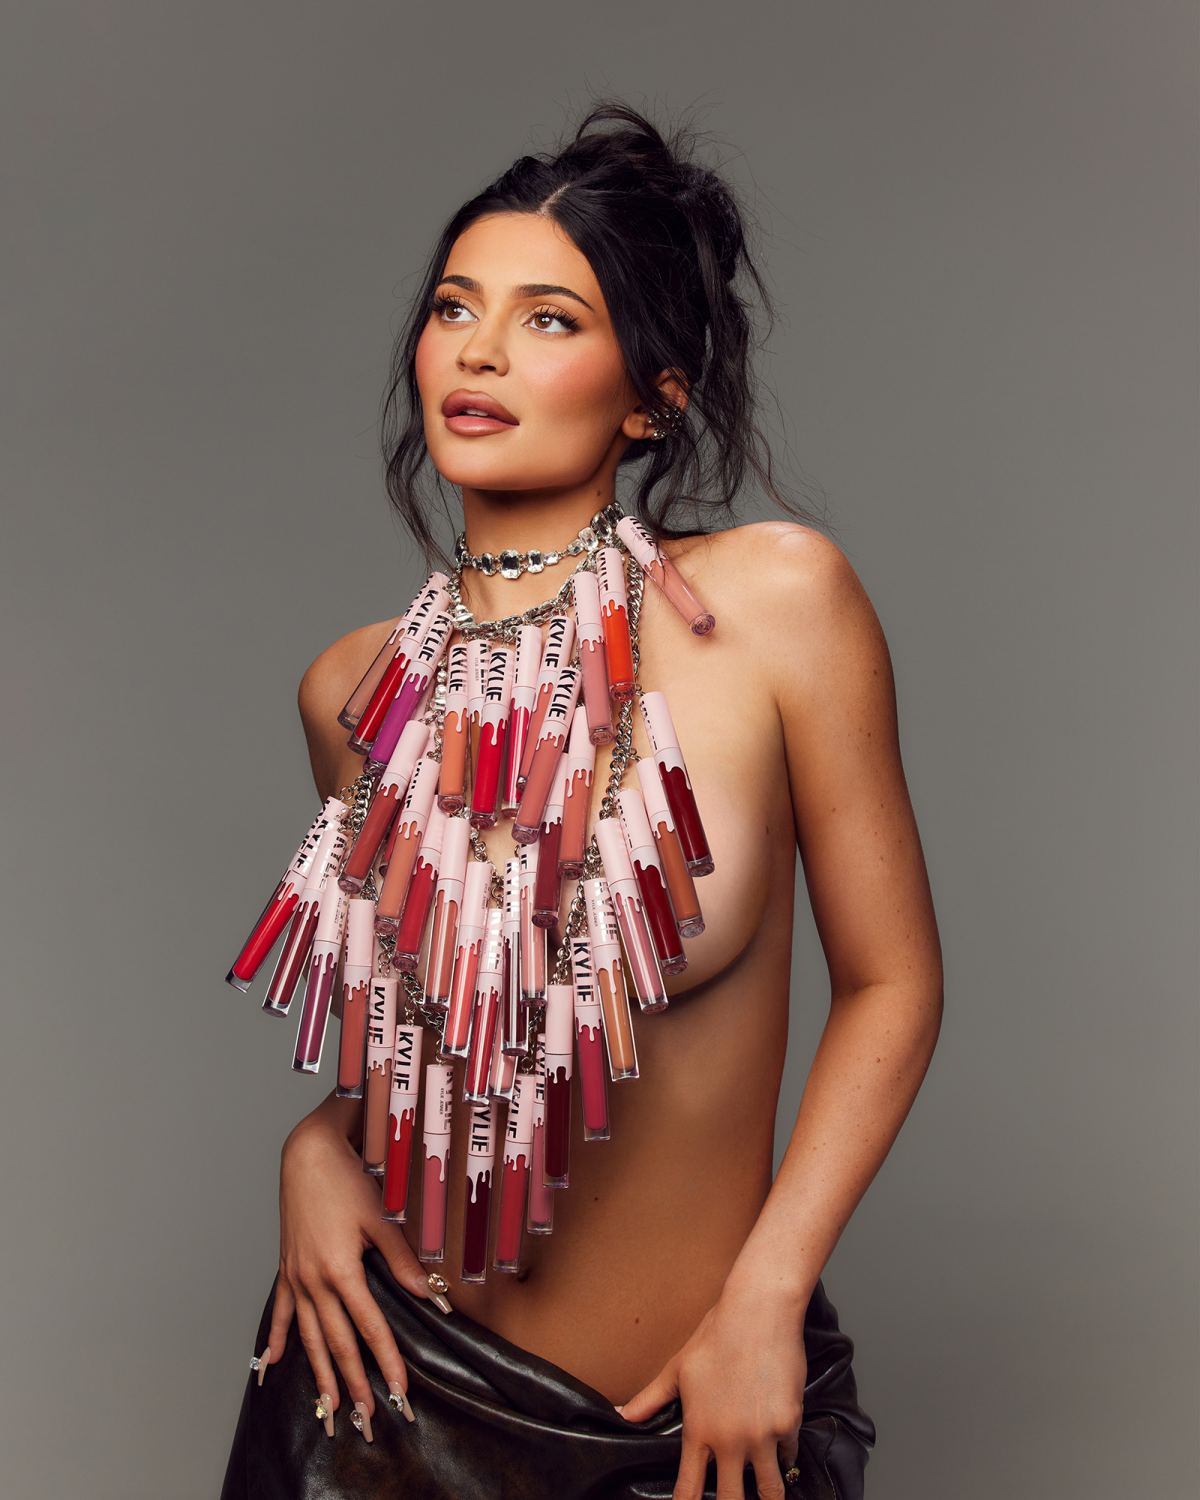 Kylie Jenner Instagram Story April 28, 2021 – Star Style